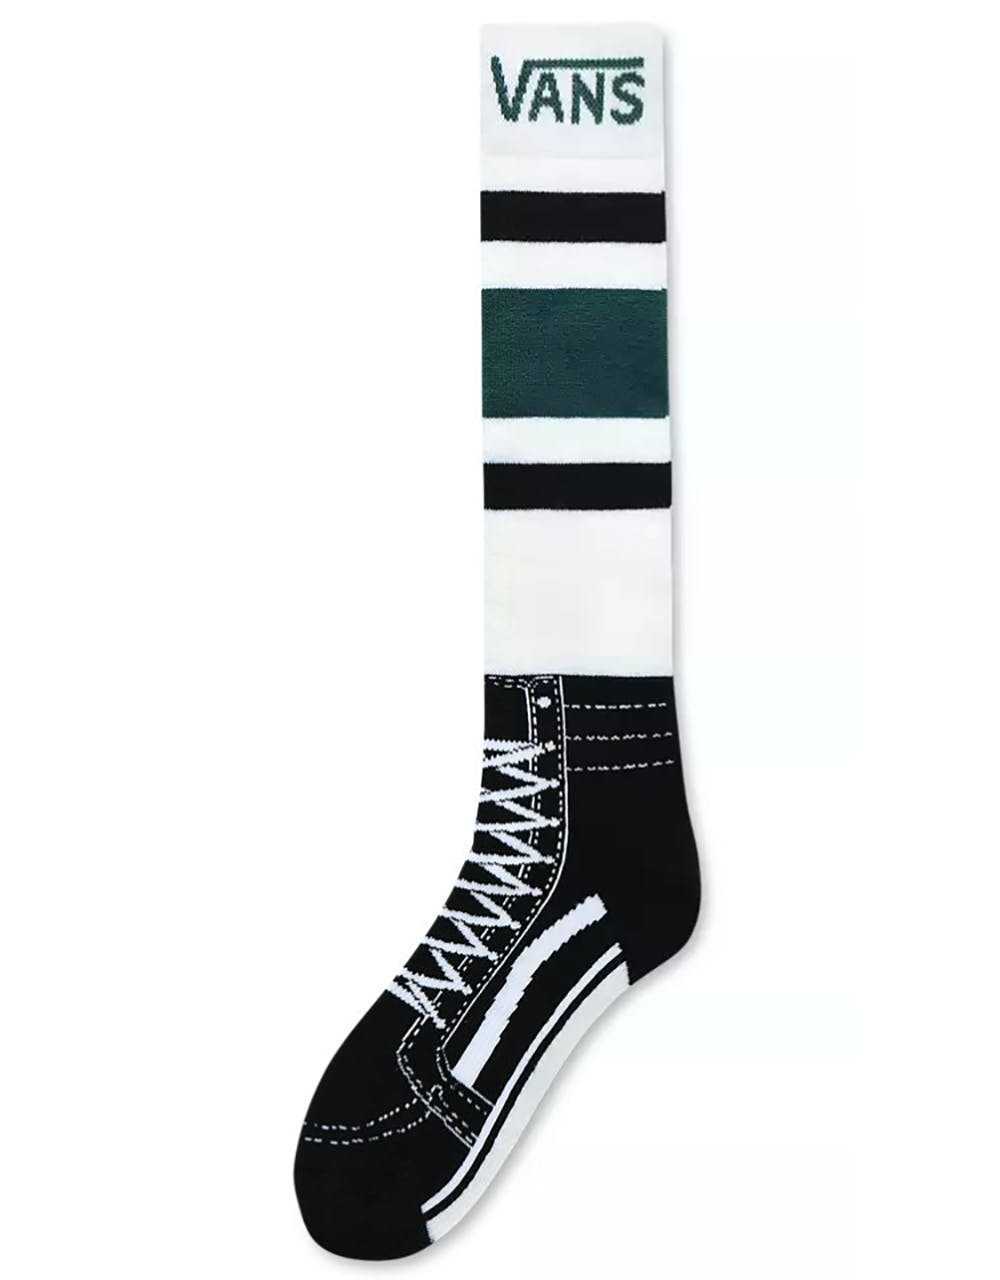 Vans Trekking Snowboard Socks - Green/Black